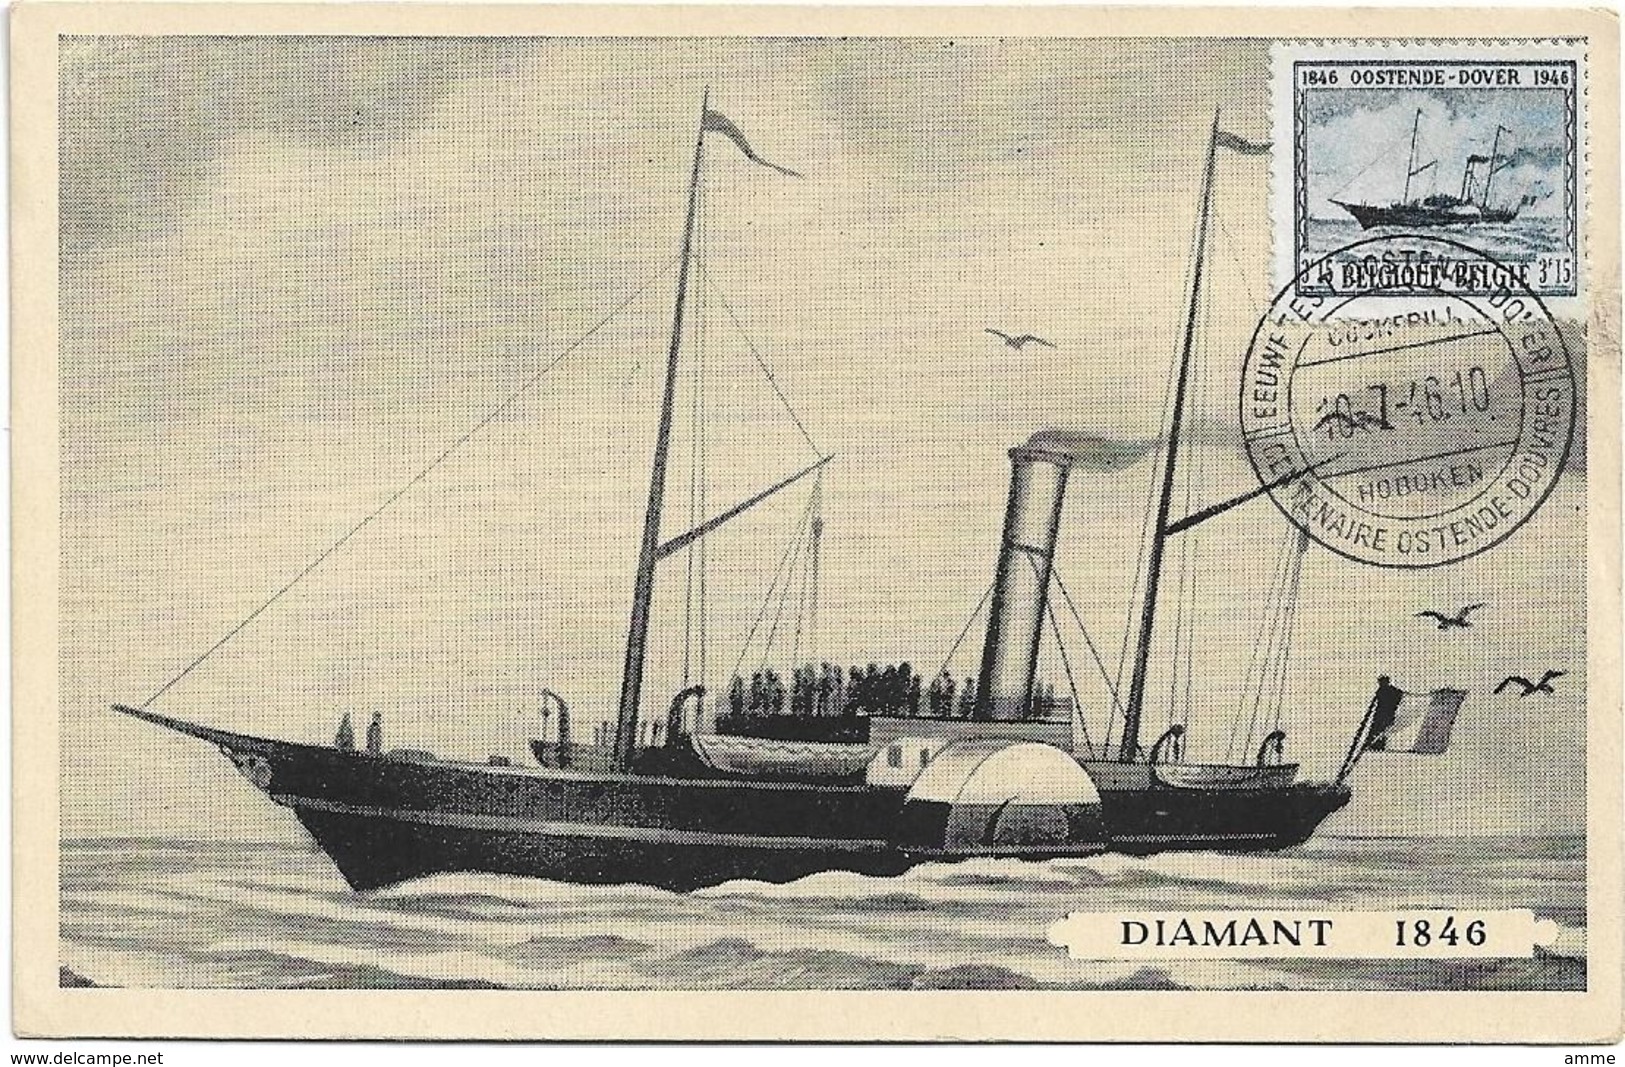 Oostende  *  Eeuwfeest - Centenaire Oostende - Dover 1946  ( Diamant 1846 ) - Cartoline Piroscafi